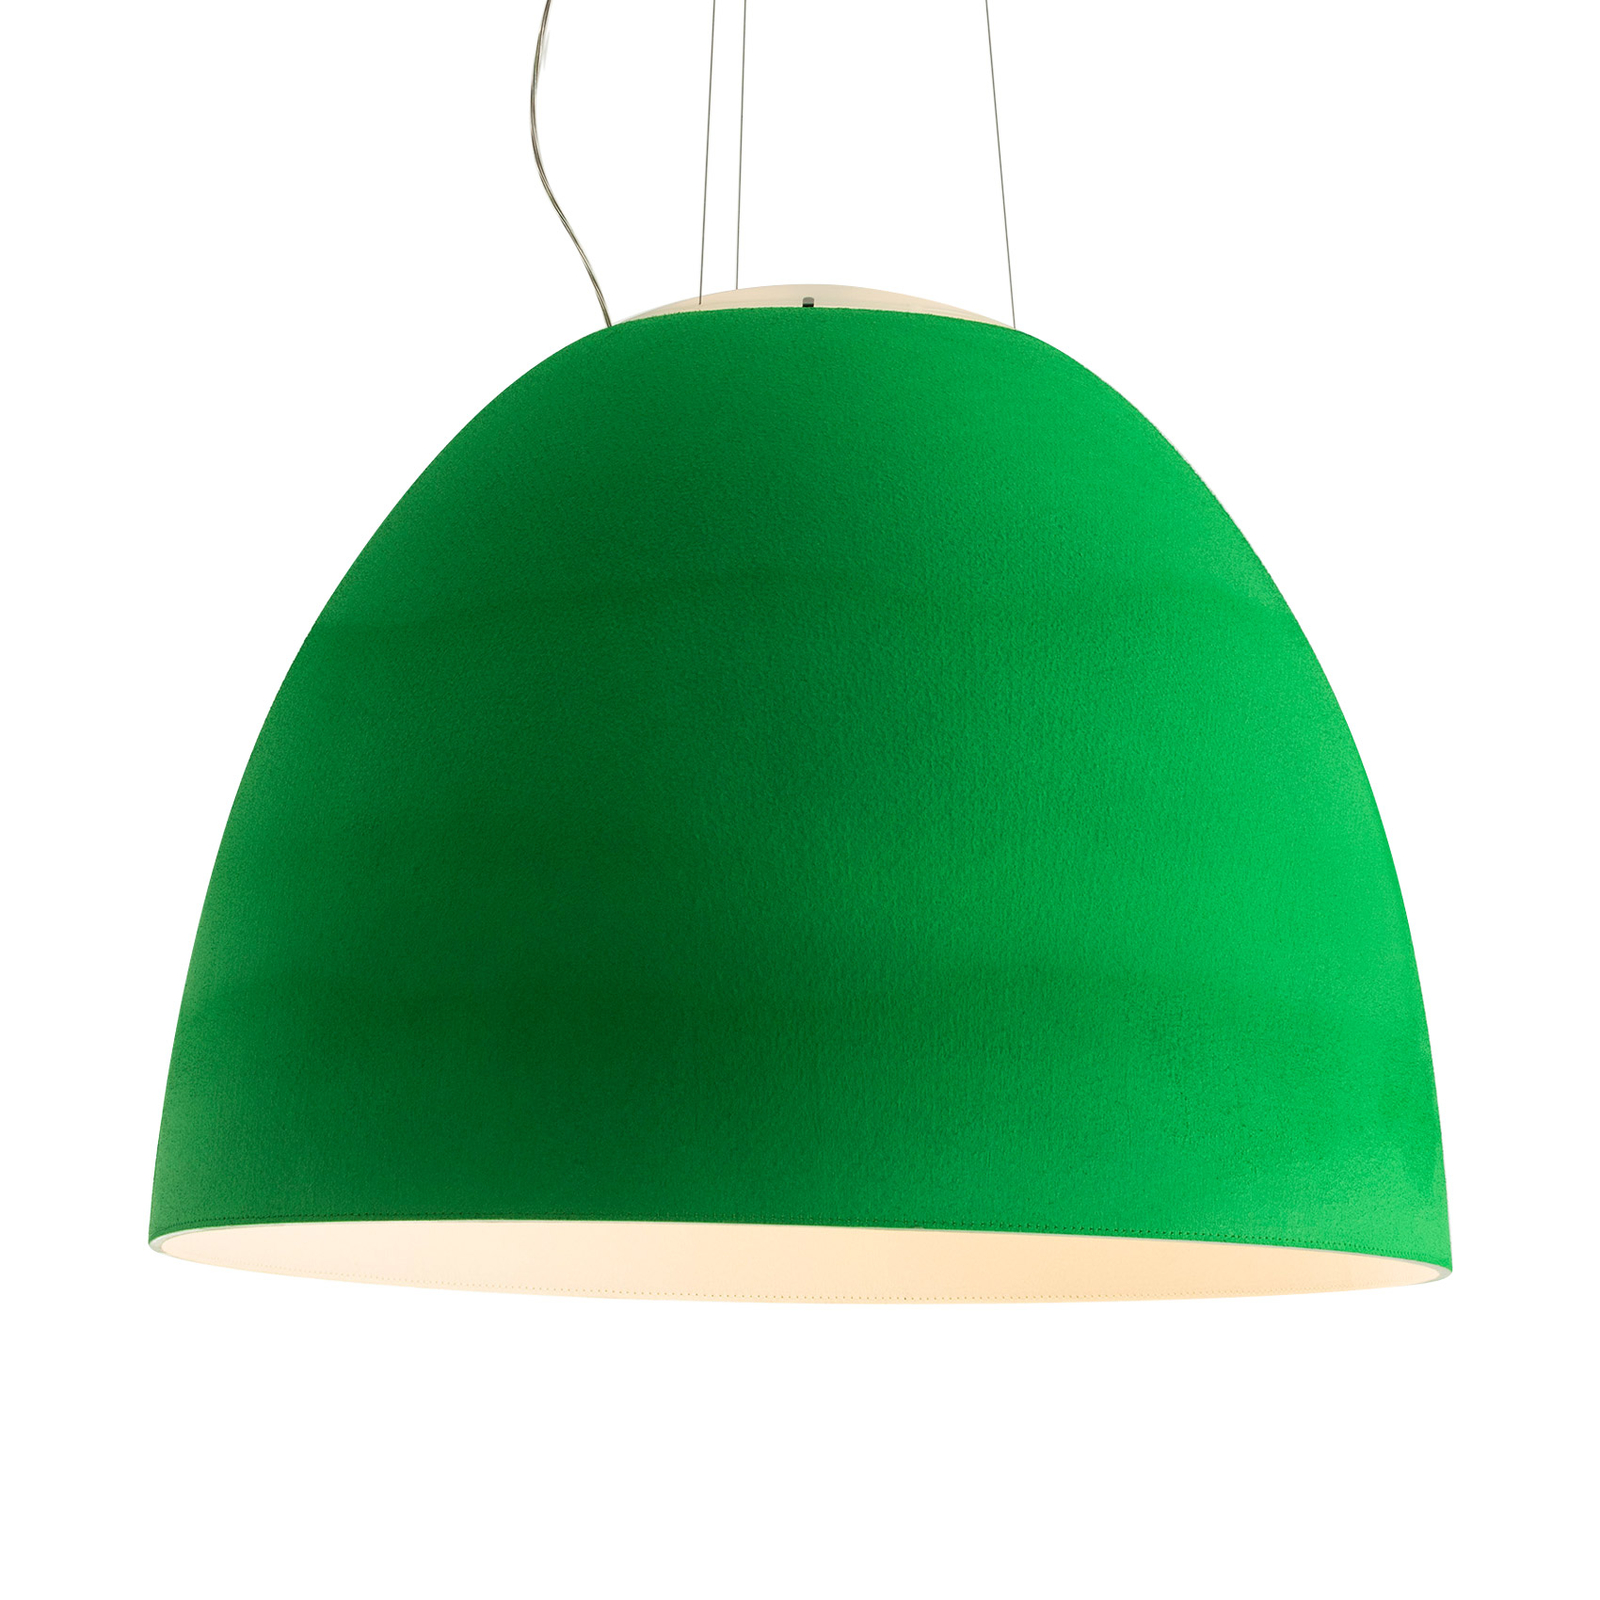 Artemide Nur Acoustic lampa wisząca LED, zielona